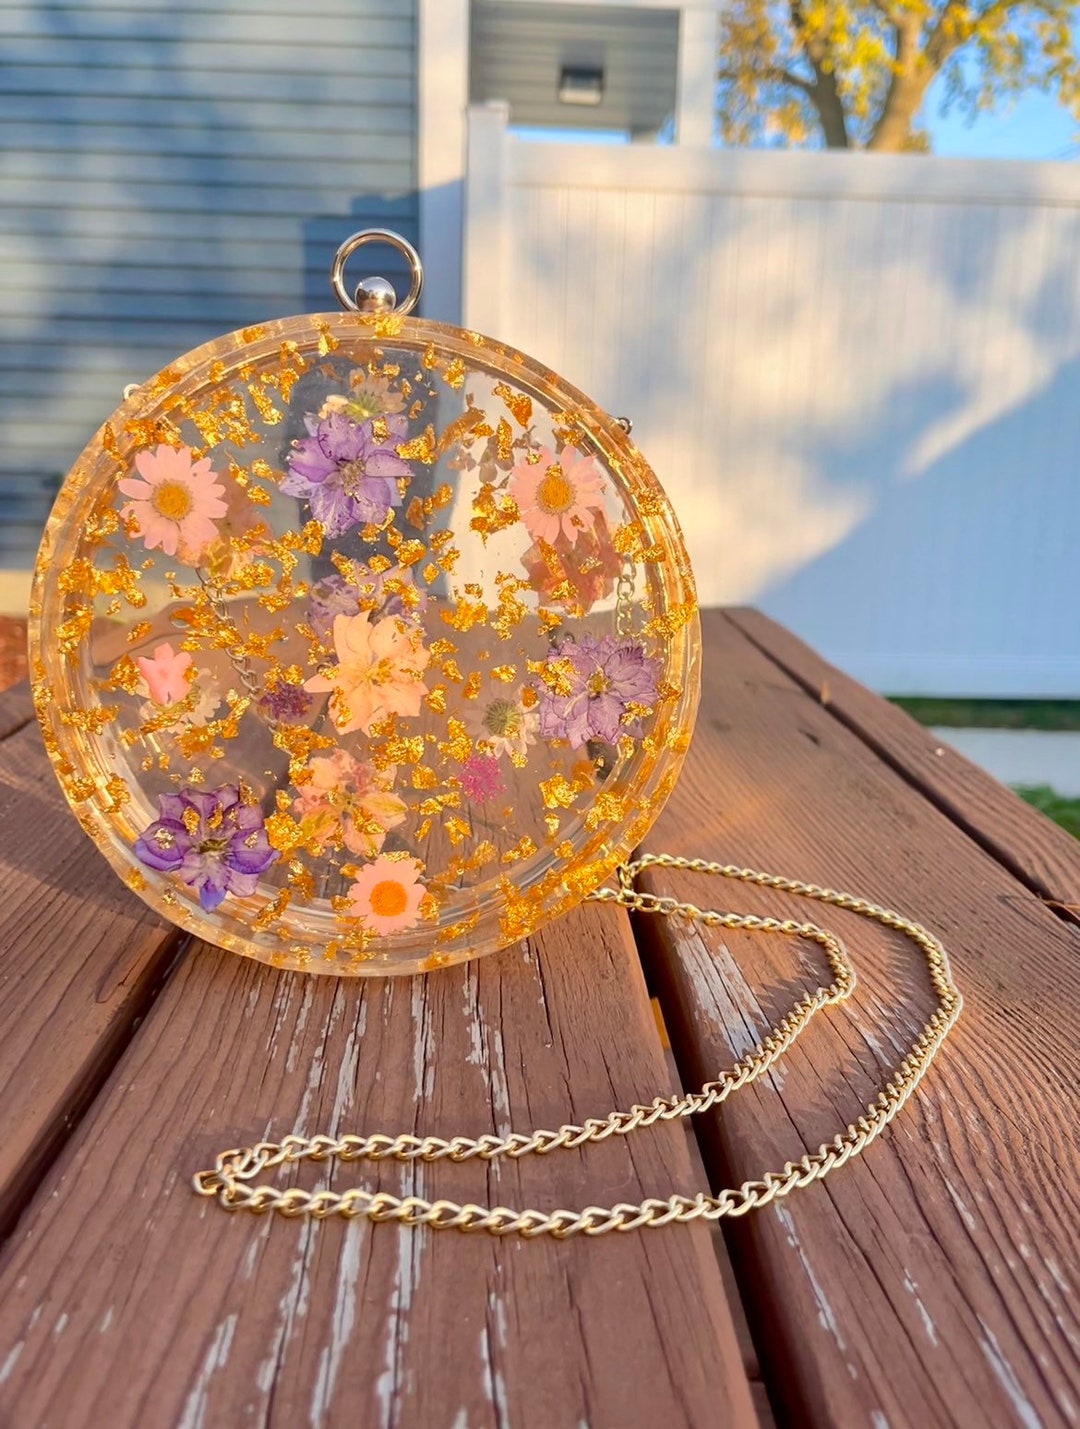 Angela Frascone Vintage Designer Resin Purse Handbag Whimsical Floral  Flowers | eBay